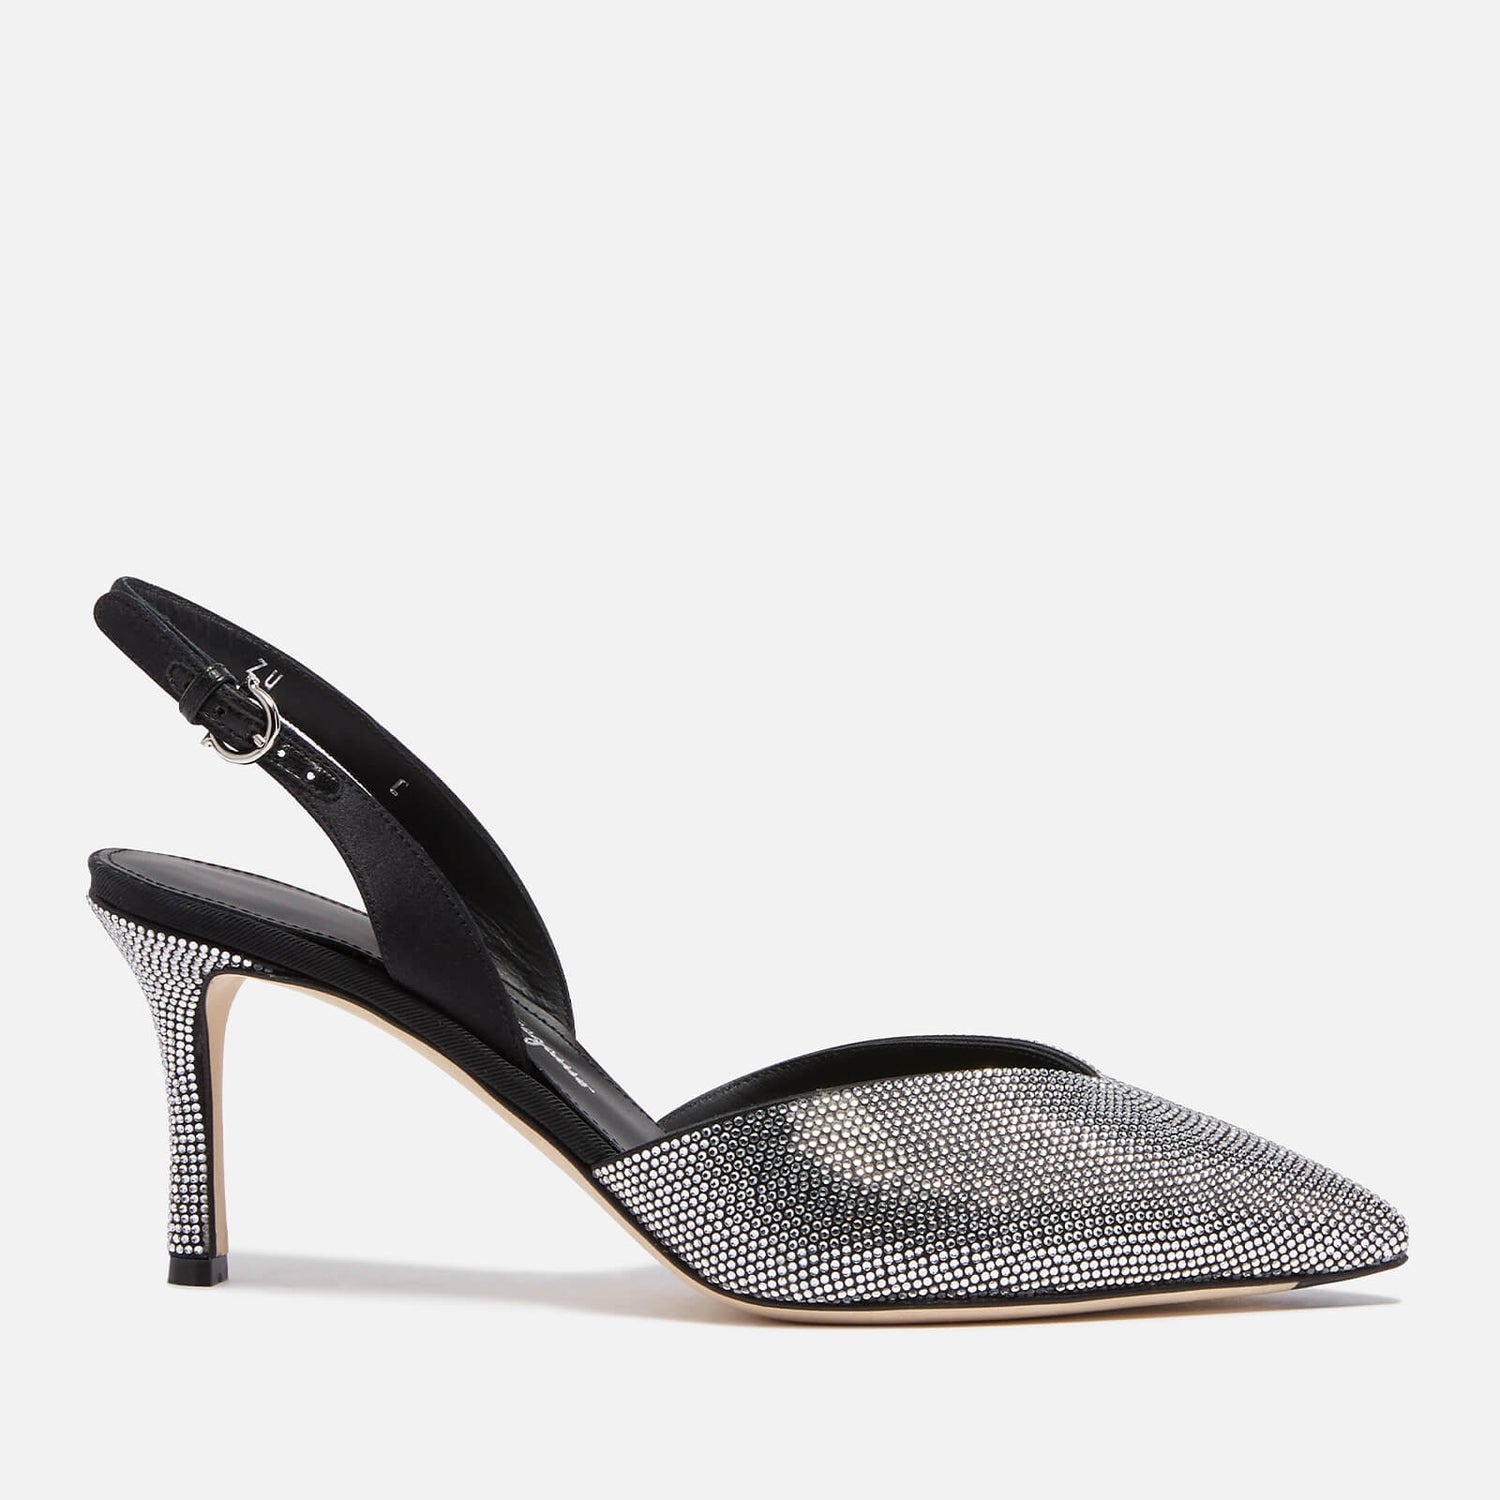 Salvatore Ferragamo Women's Ileen 70 T Sling Back Court Shoes - Nero - UK 4